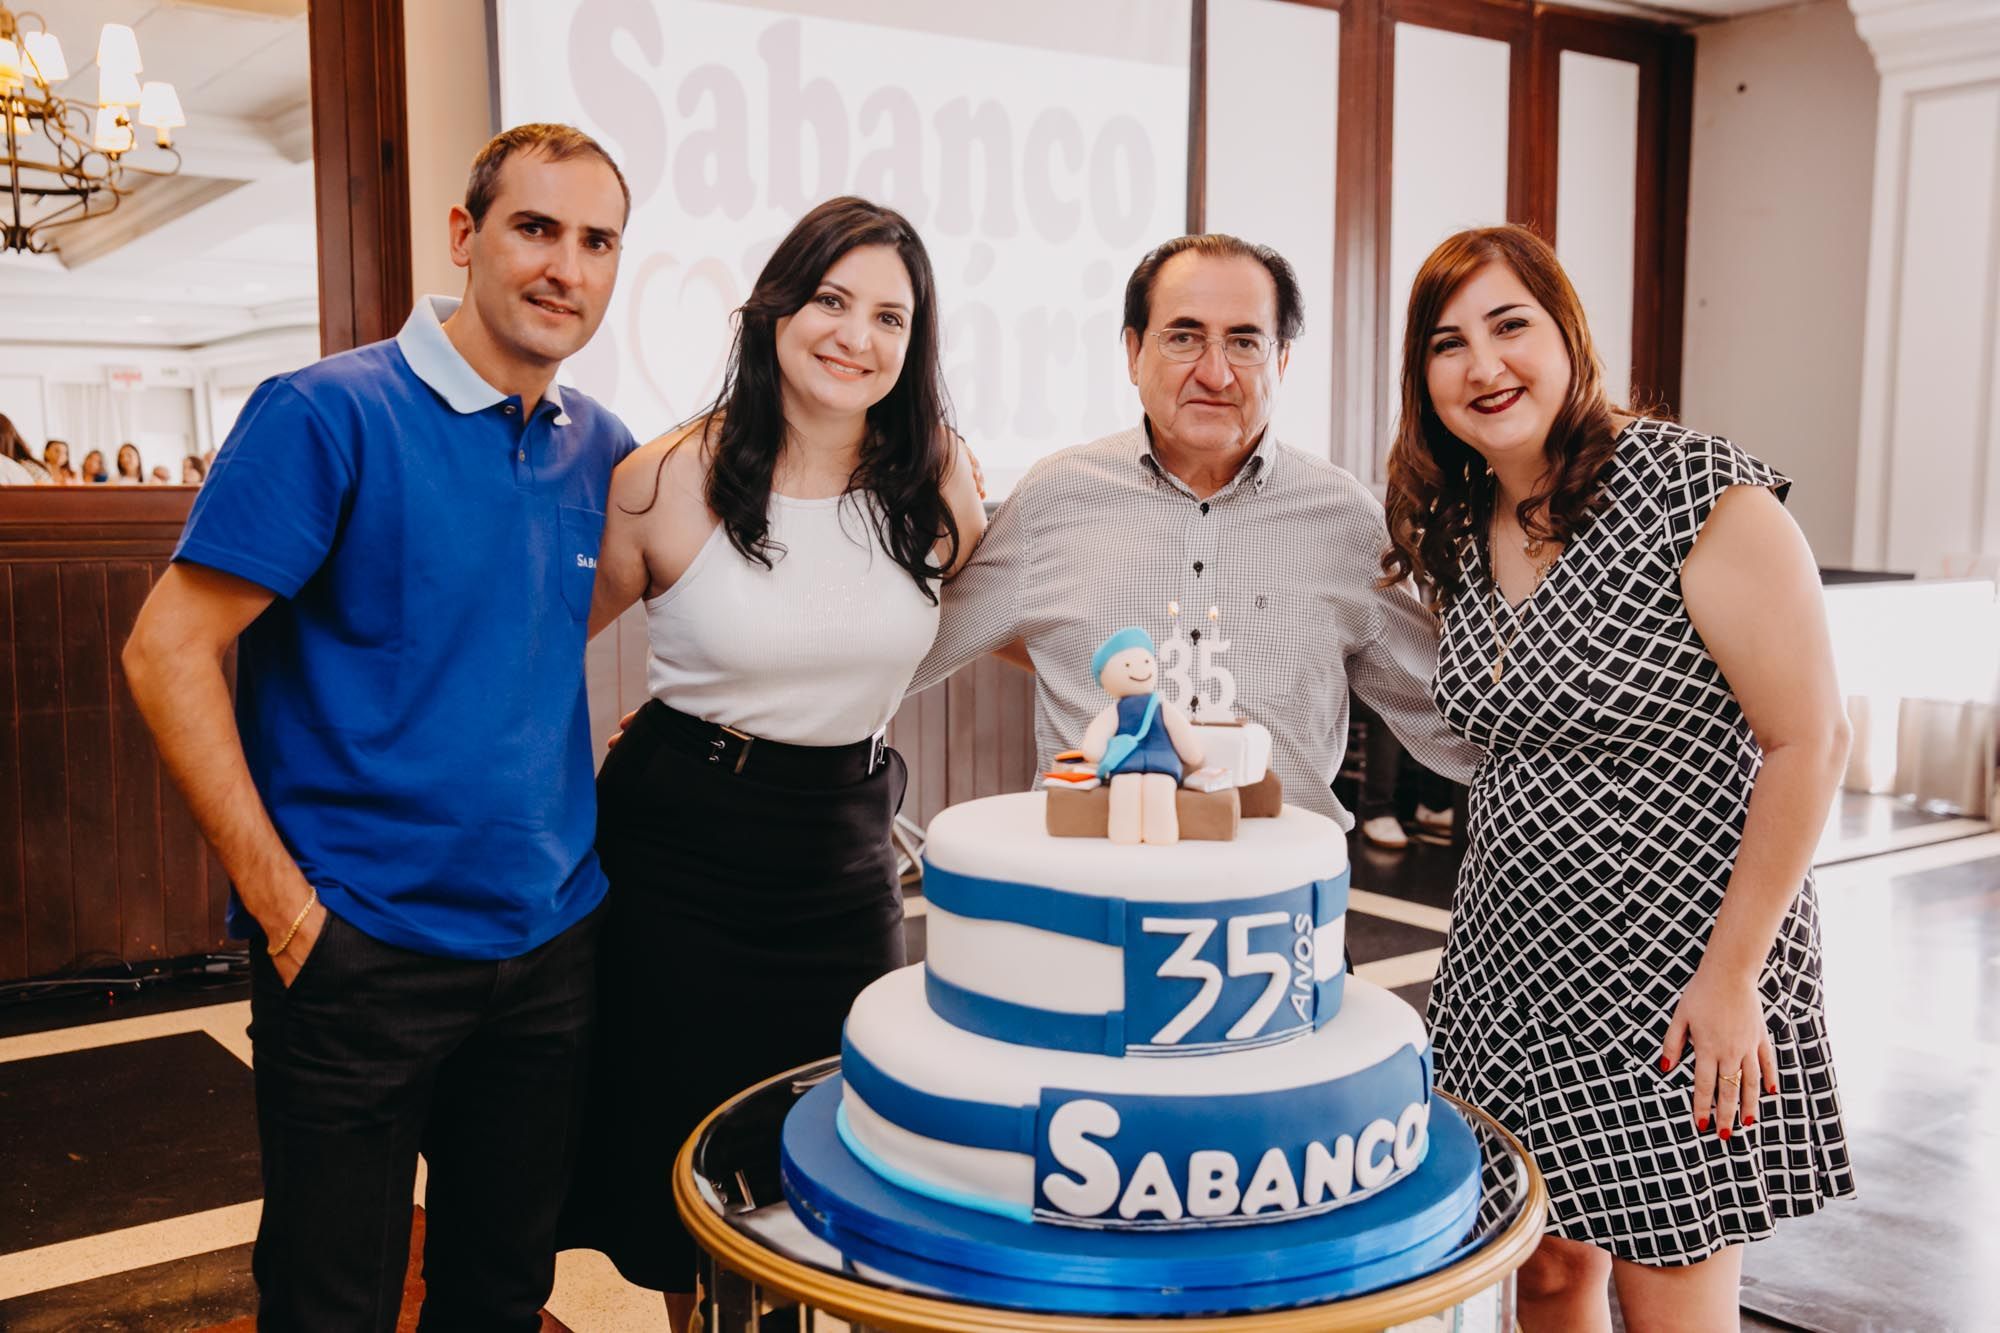 Grupo Sabanco 35 Anos